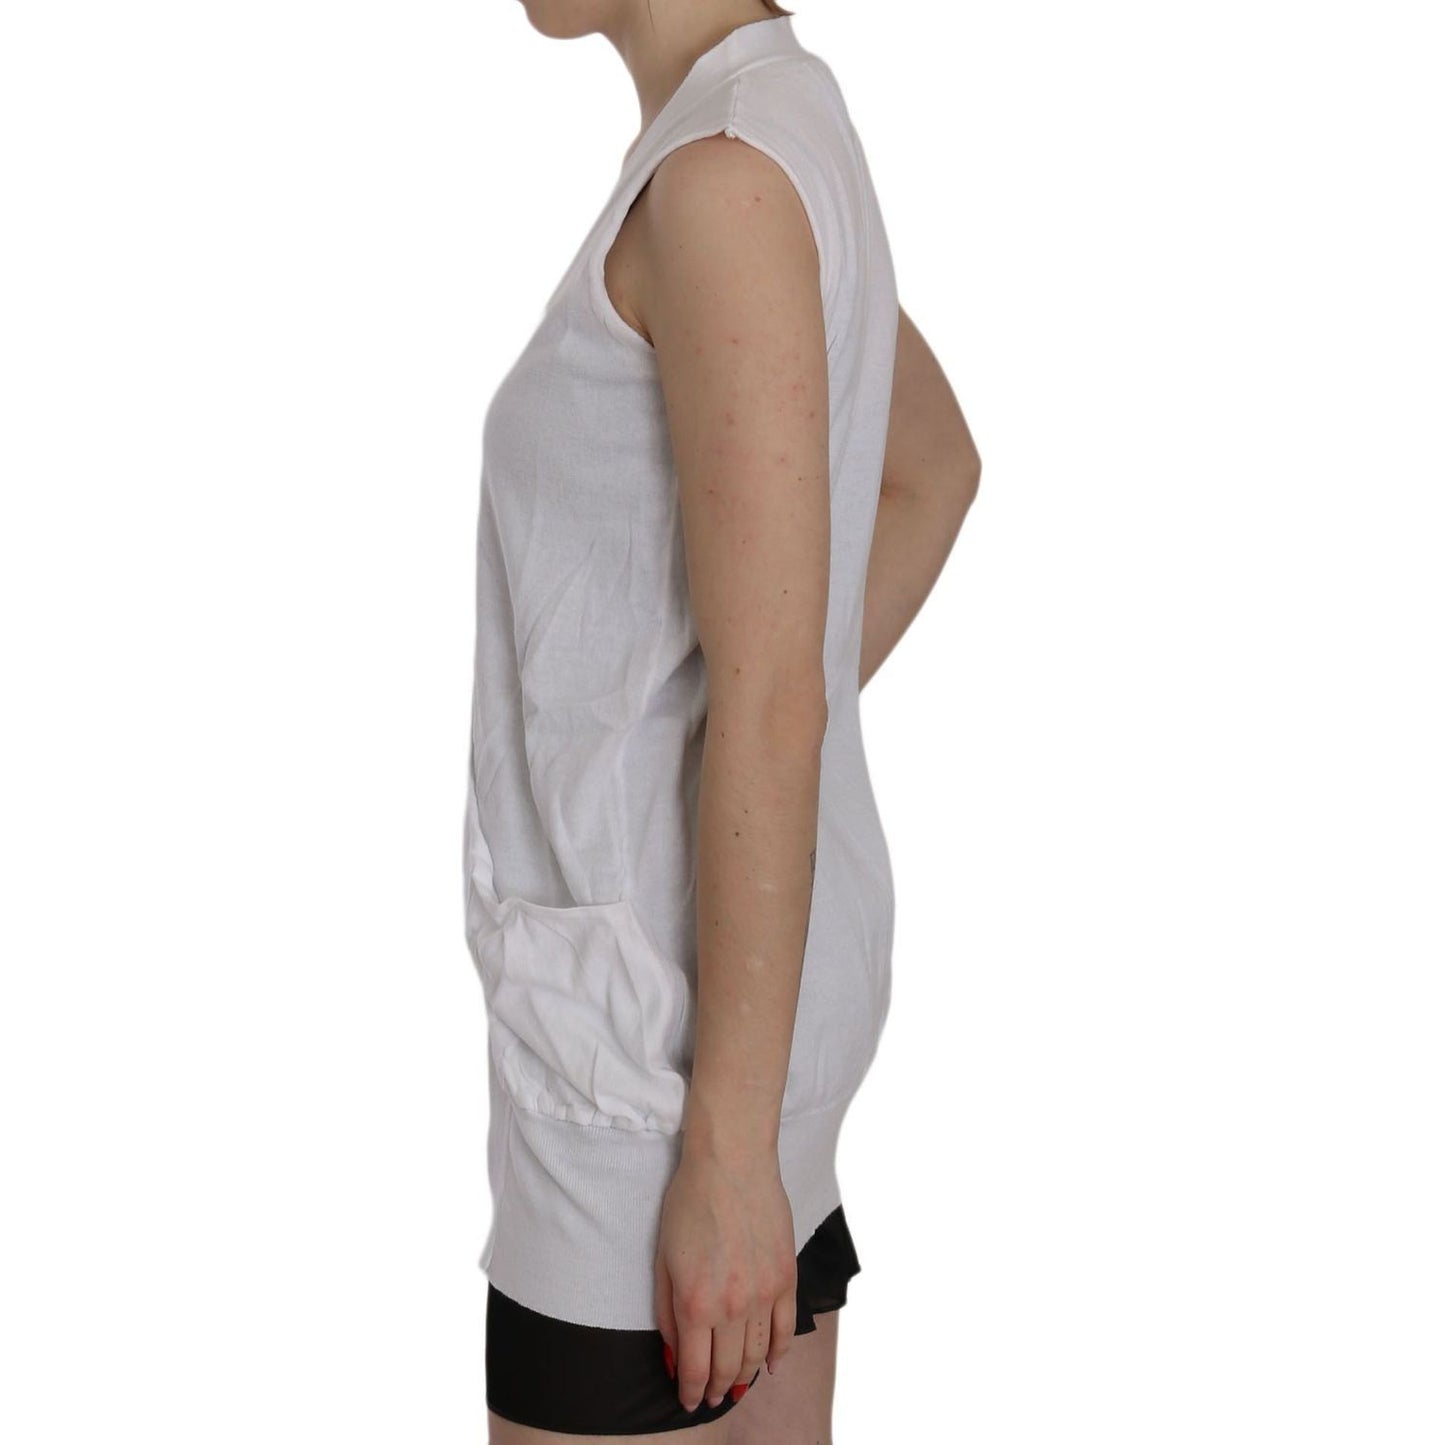 PINK MEMORIES Elegant Sleeveless Cotton Vest in Pristine White white-100-cotton-sleeveless-cardigan-top-vest IMG_1917-78119263-3d8.jpg